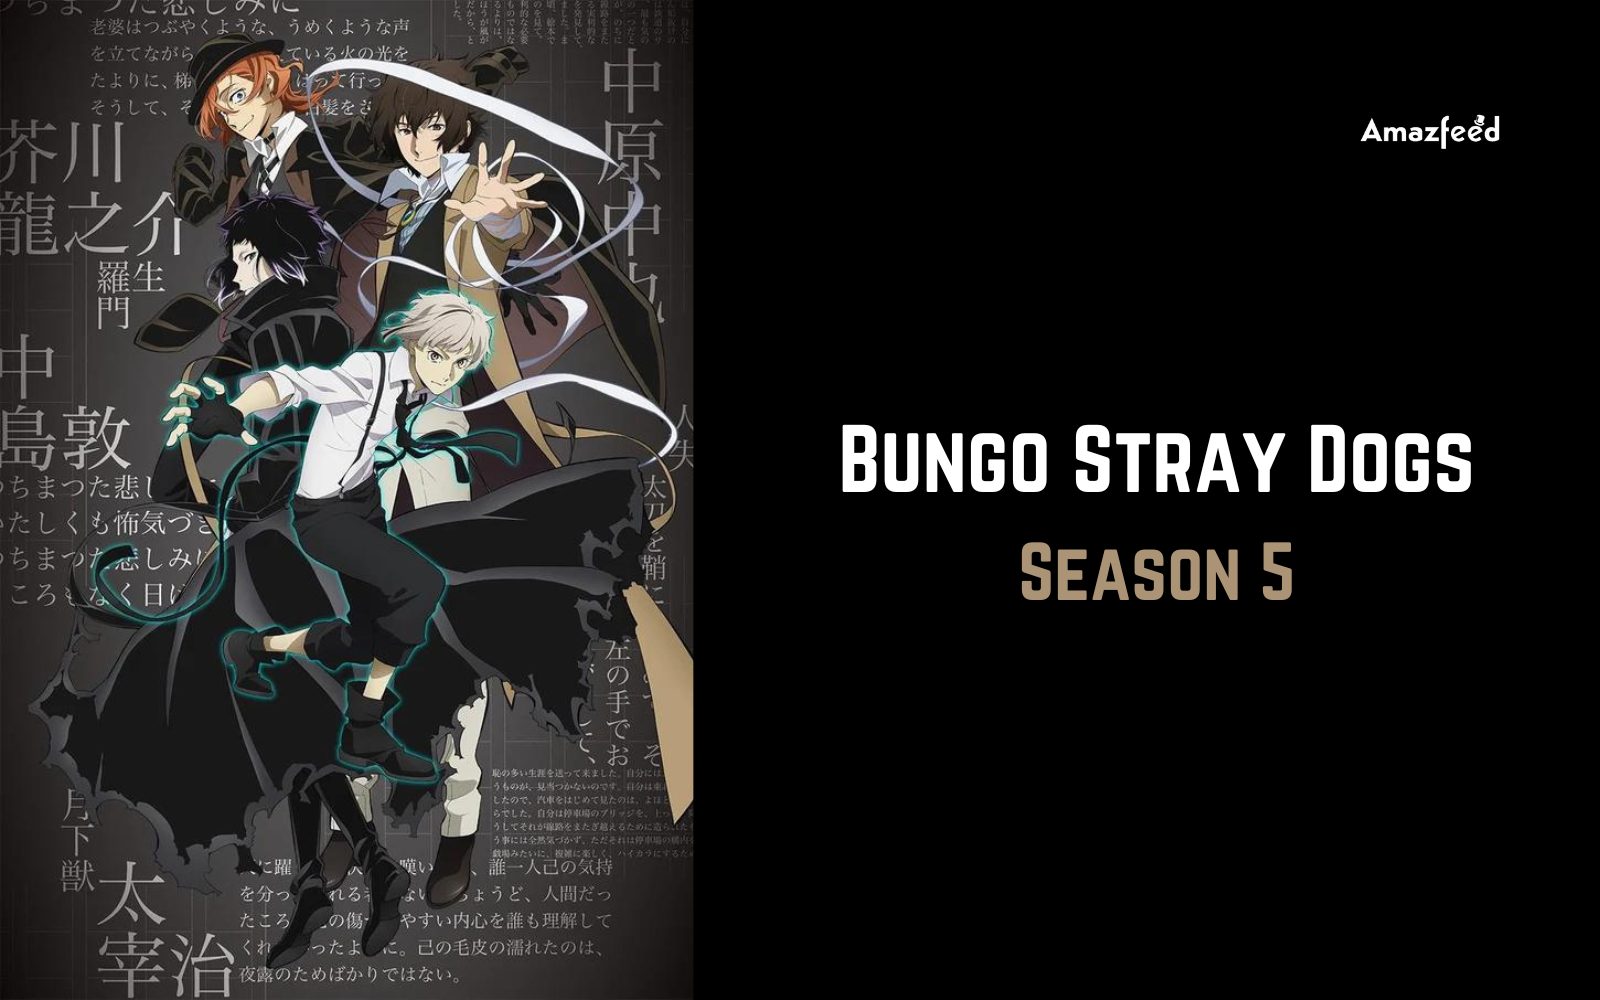 Bungo Stray Dogs Season 5 English Dub Reveals Cast and Crew, Release Date -  Crunchyroll News